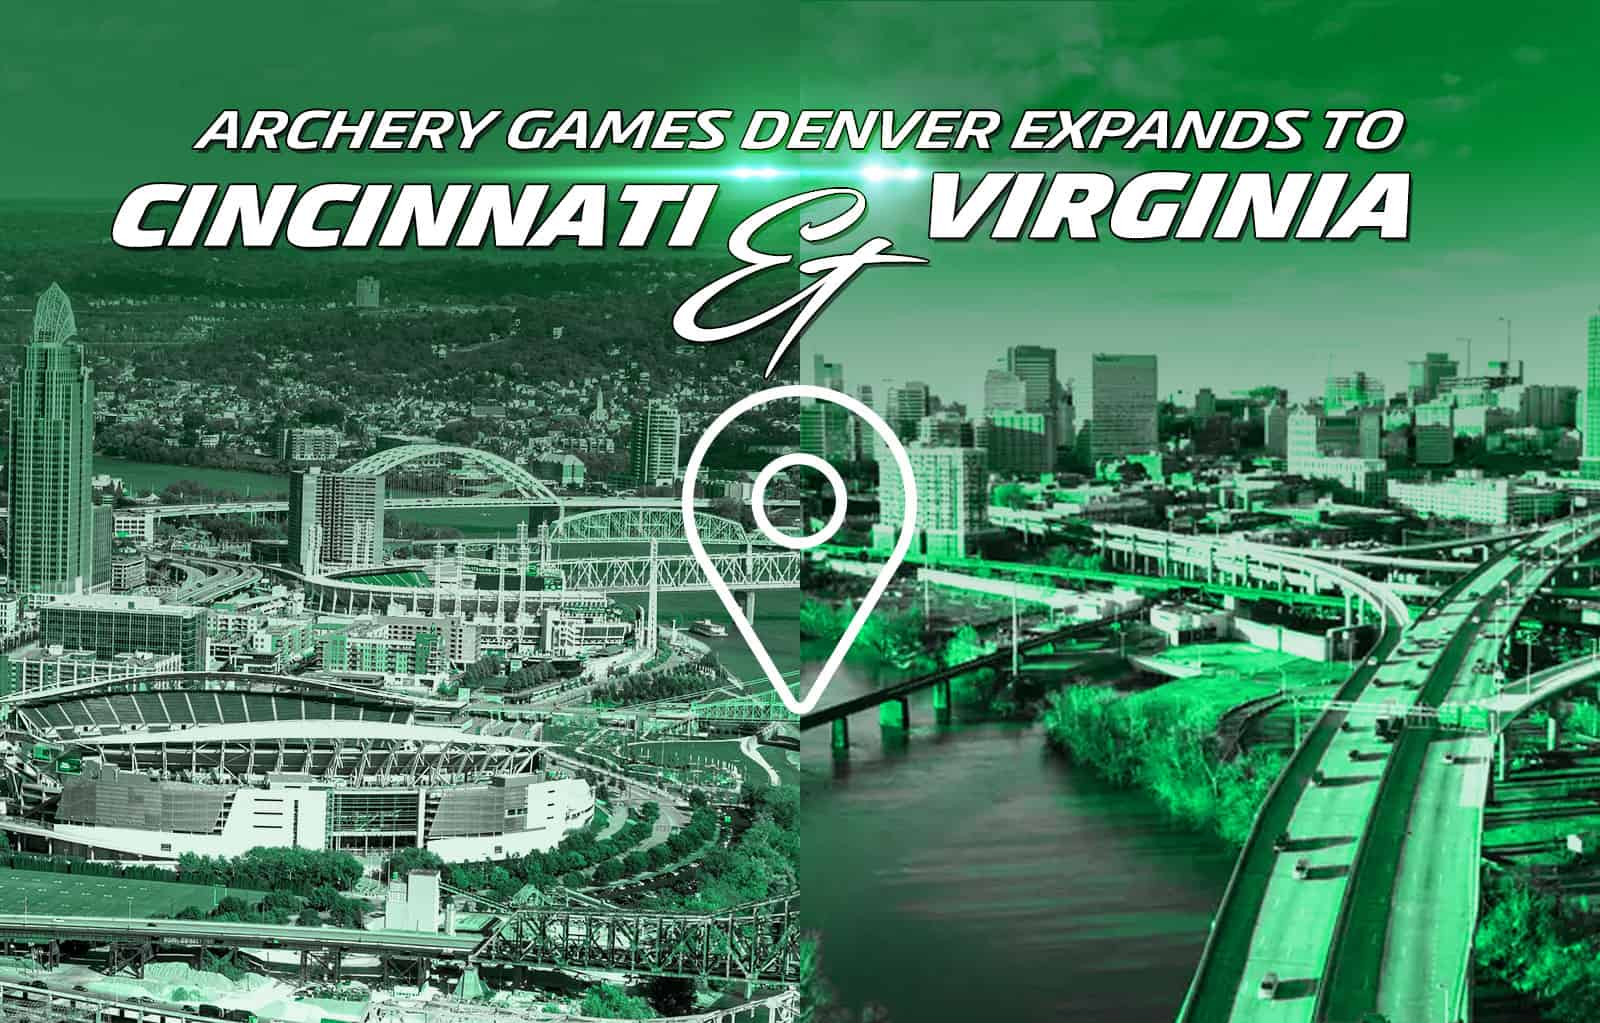 Archery Games Denver Expands To Cincinnati And Virginia!